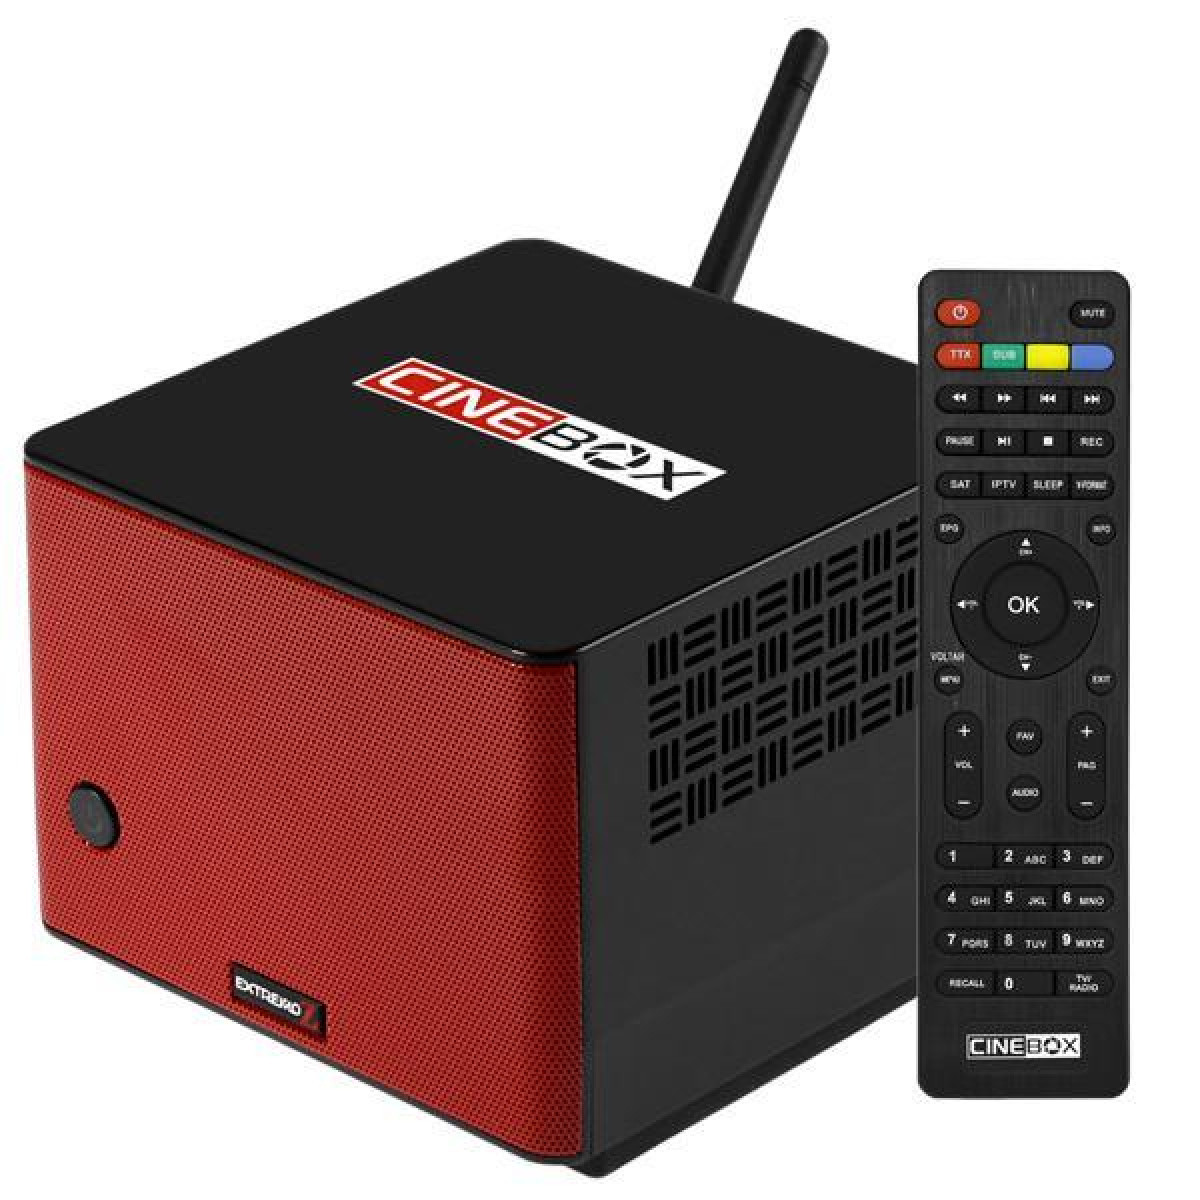 Receptor Cinebox Extremo - Receptor Full HD + Speaker - Lançamento 2019